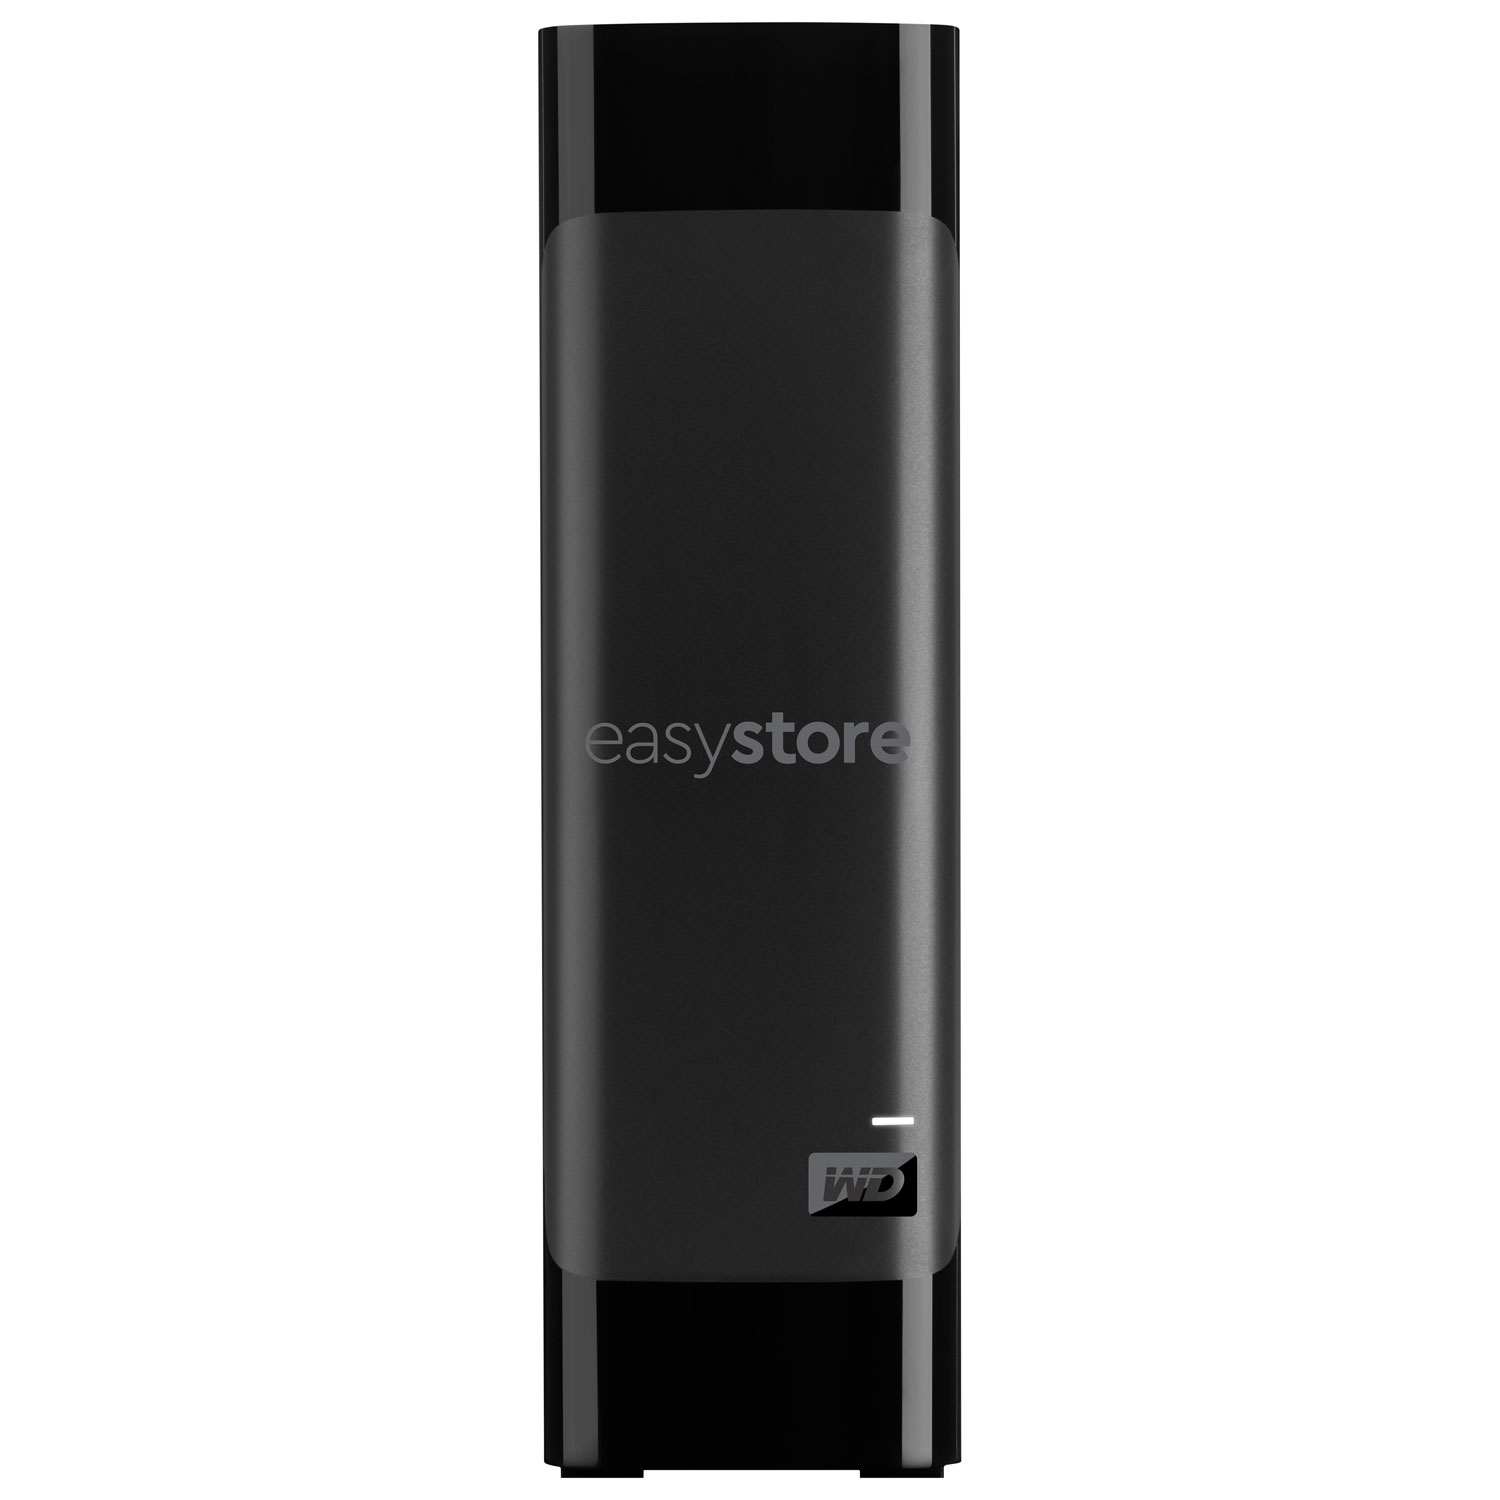 WD easystore 20TB USB 3.0 Desktop External Hard Drive (WDBAMA0200HBK-NESN) - Black